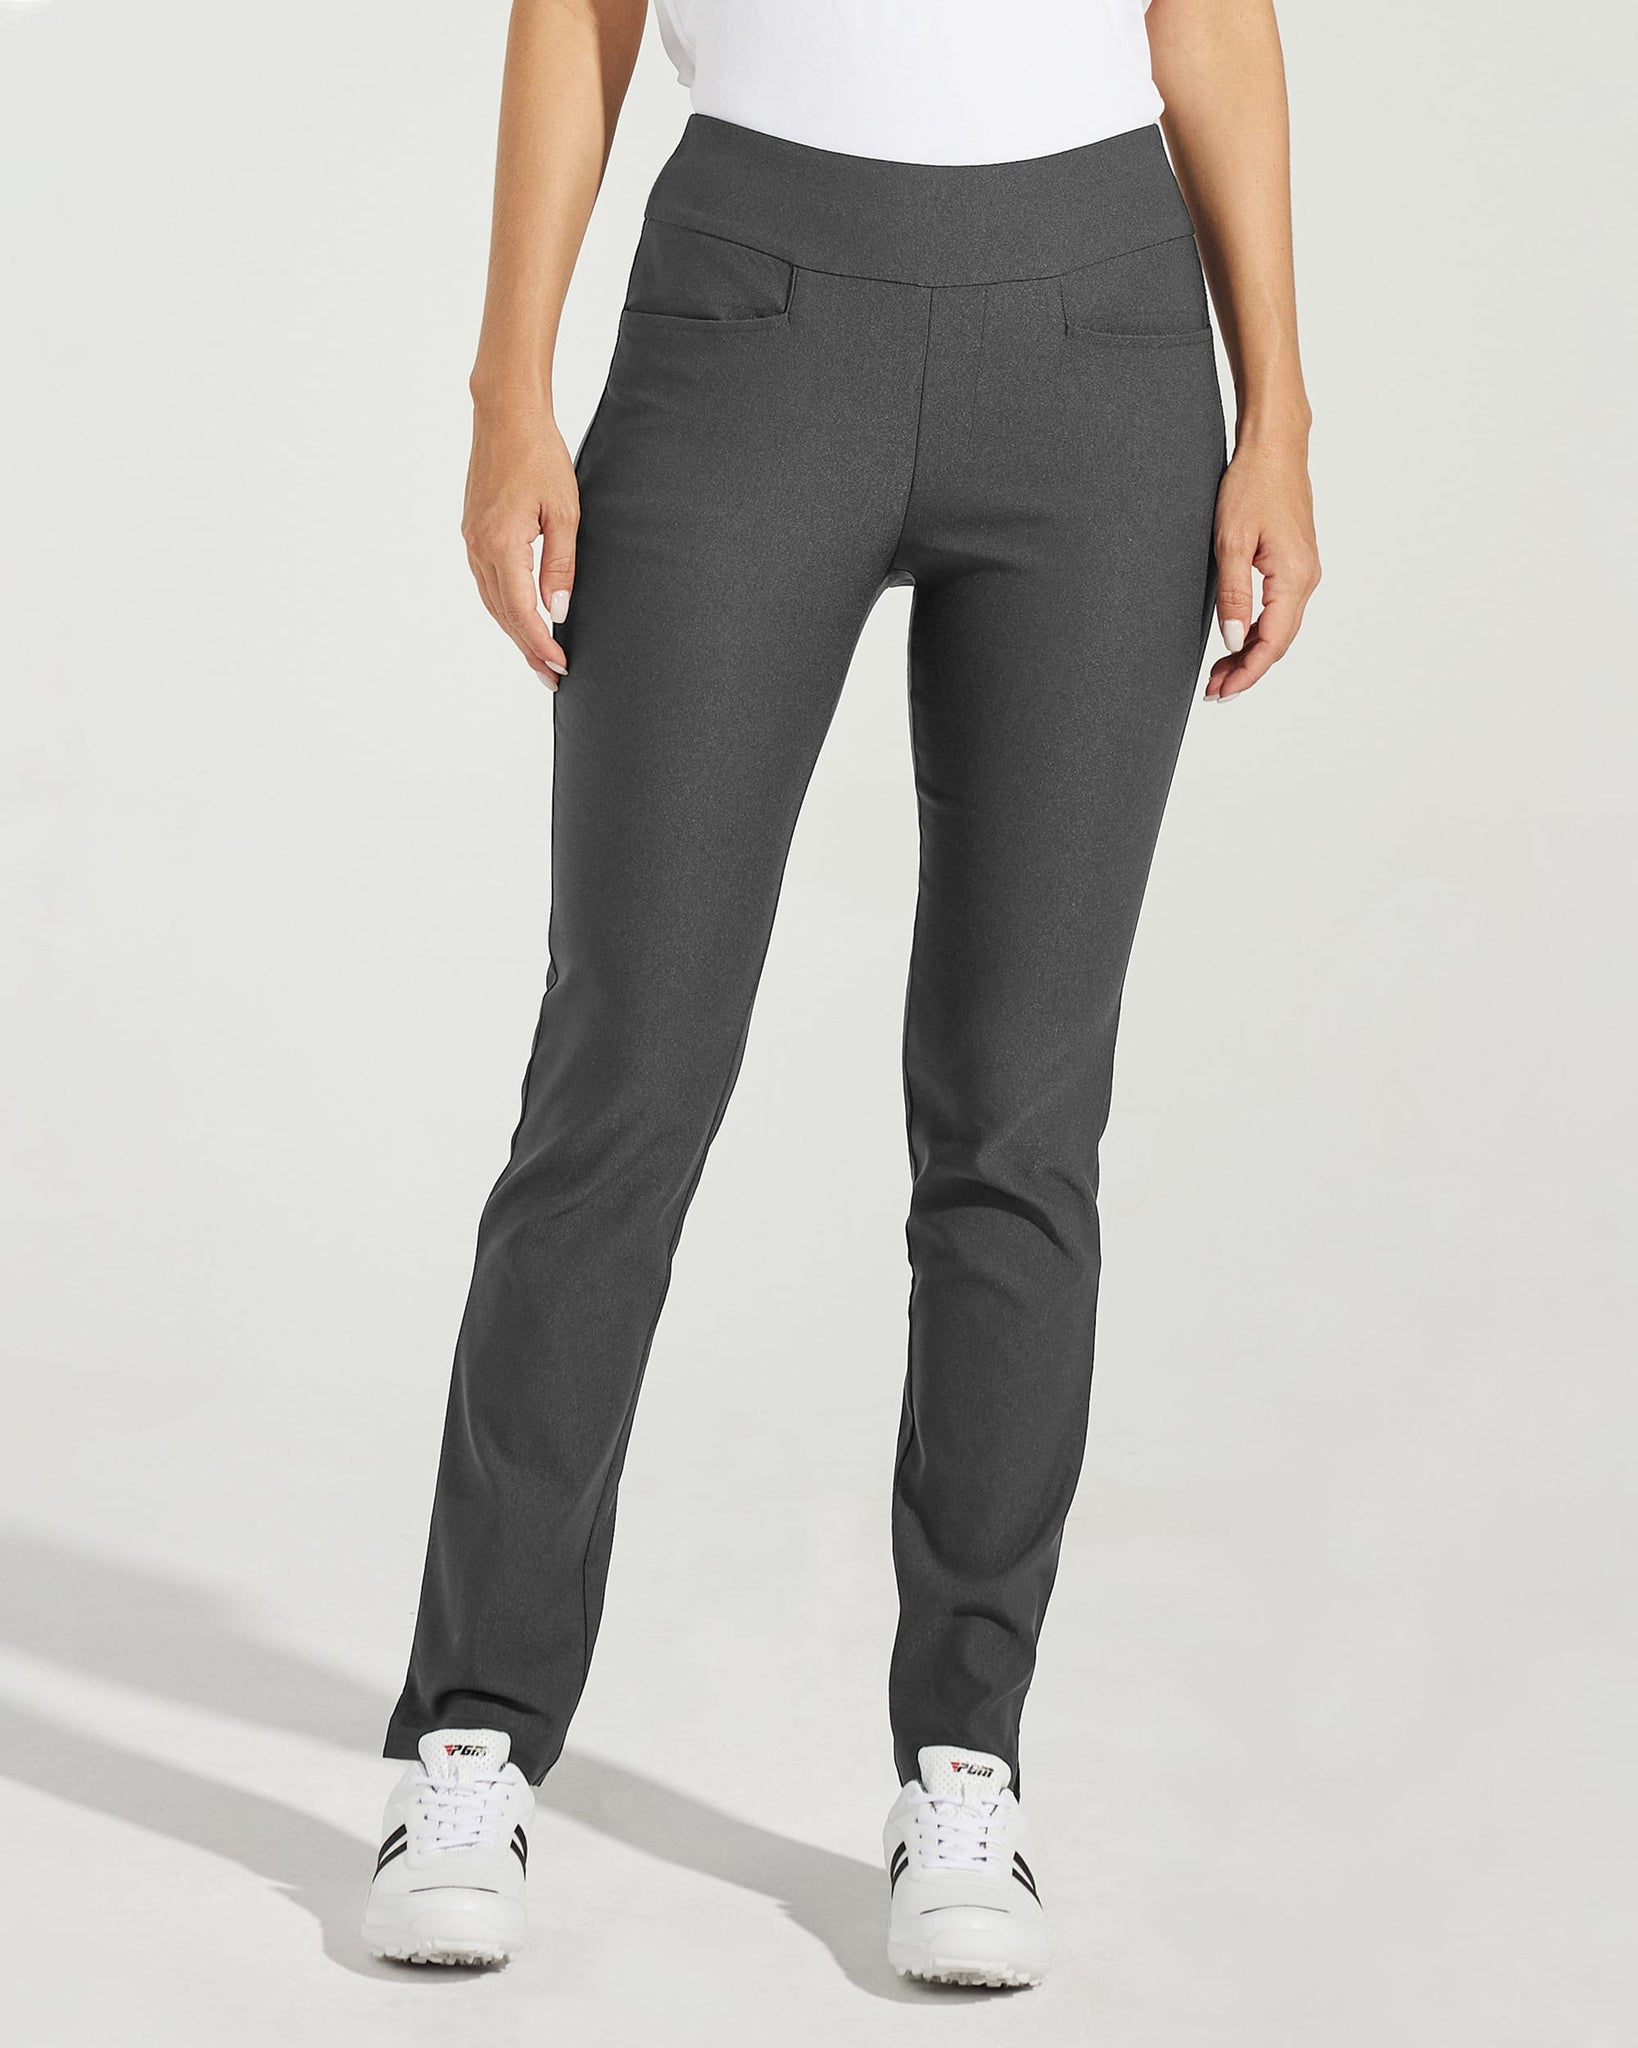 Women's Golf Pull-On Pants_DeepGray_model1